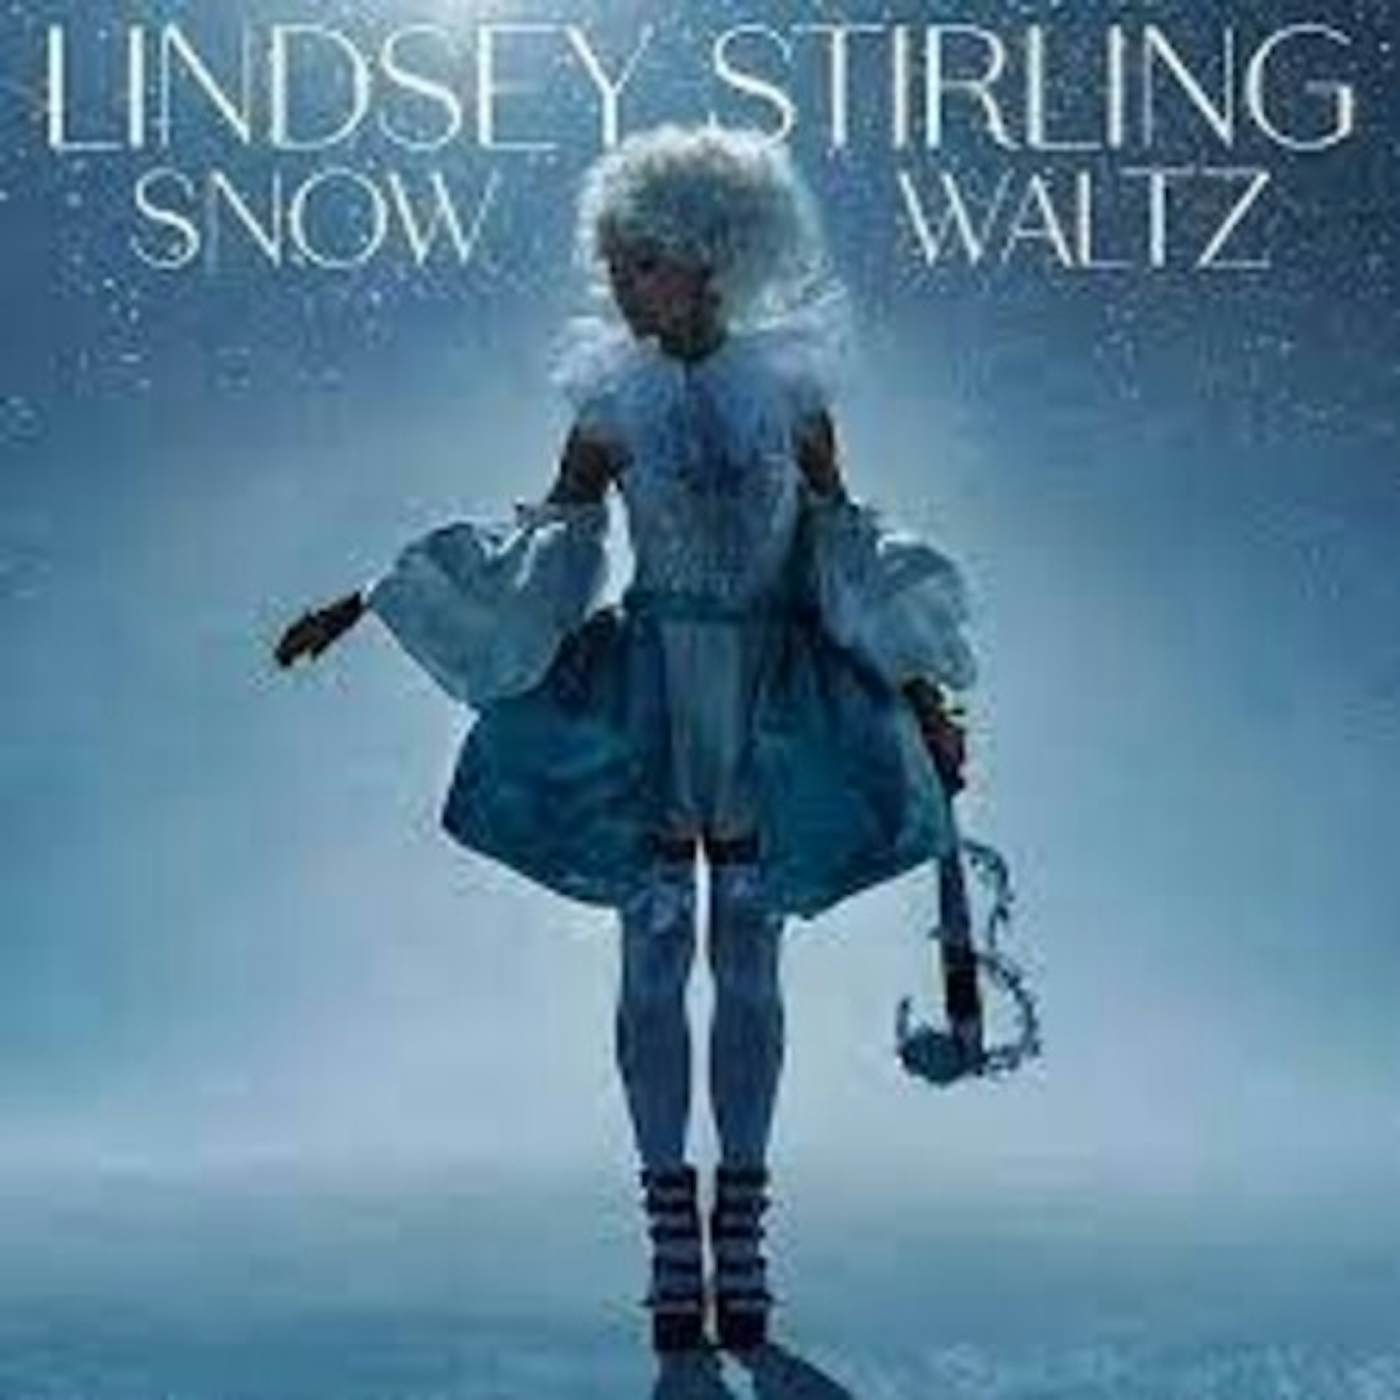 Lindsey Stirling Snow Waltz (Green & Black/Limited Edition)Vinyl Record